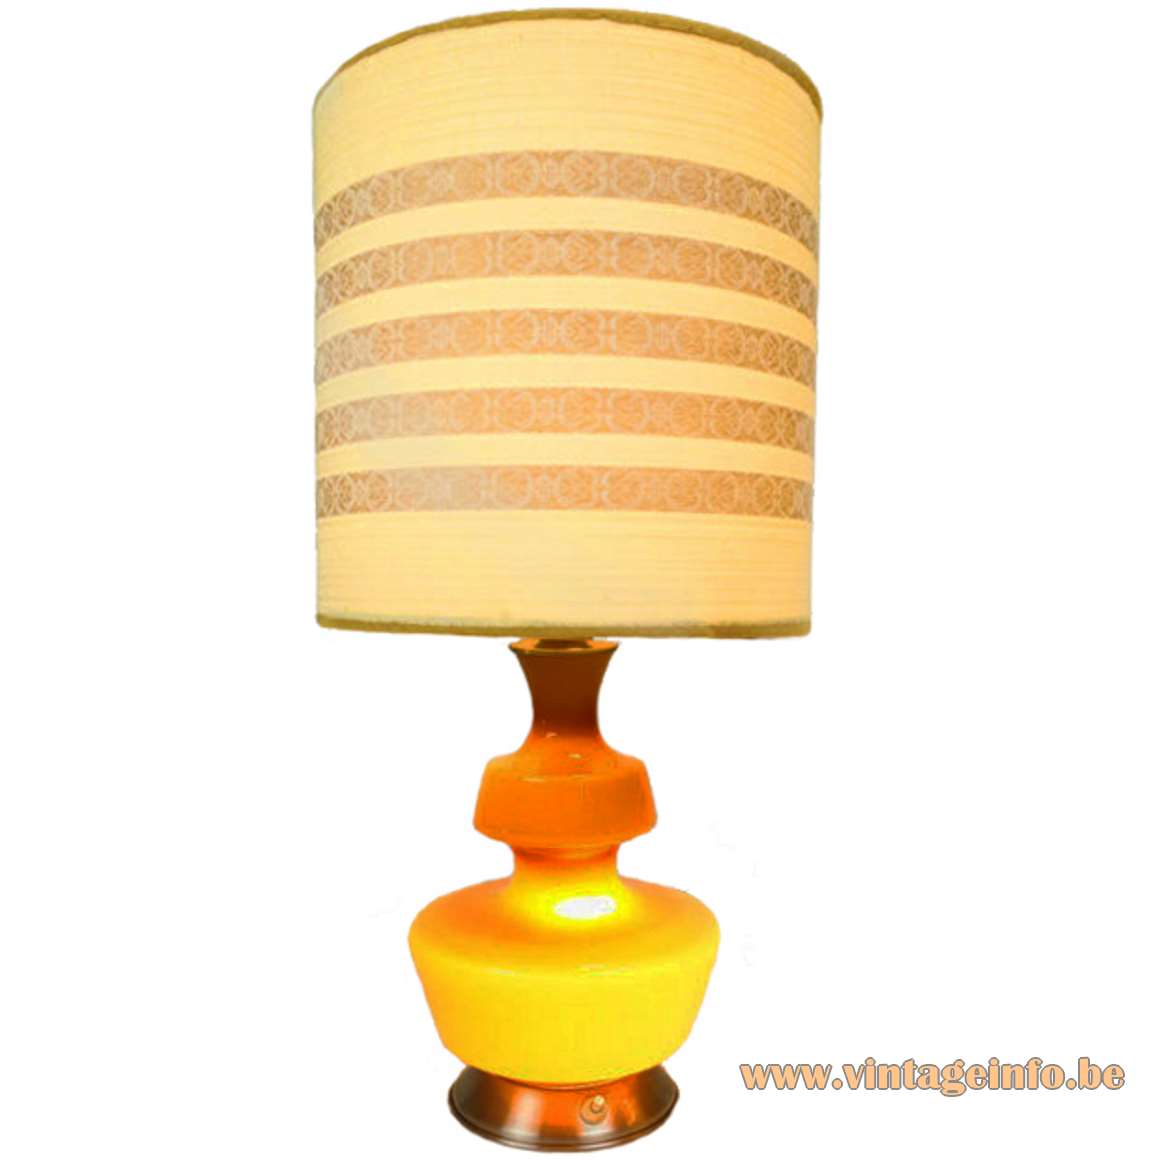 Holmegaard table lamp aluminium base yellow-ochre glass round striped fabric lampshade 1960s 1970s Massive Belgium 